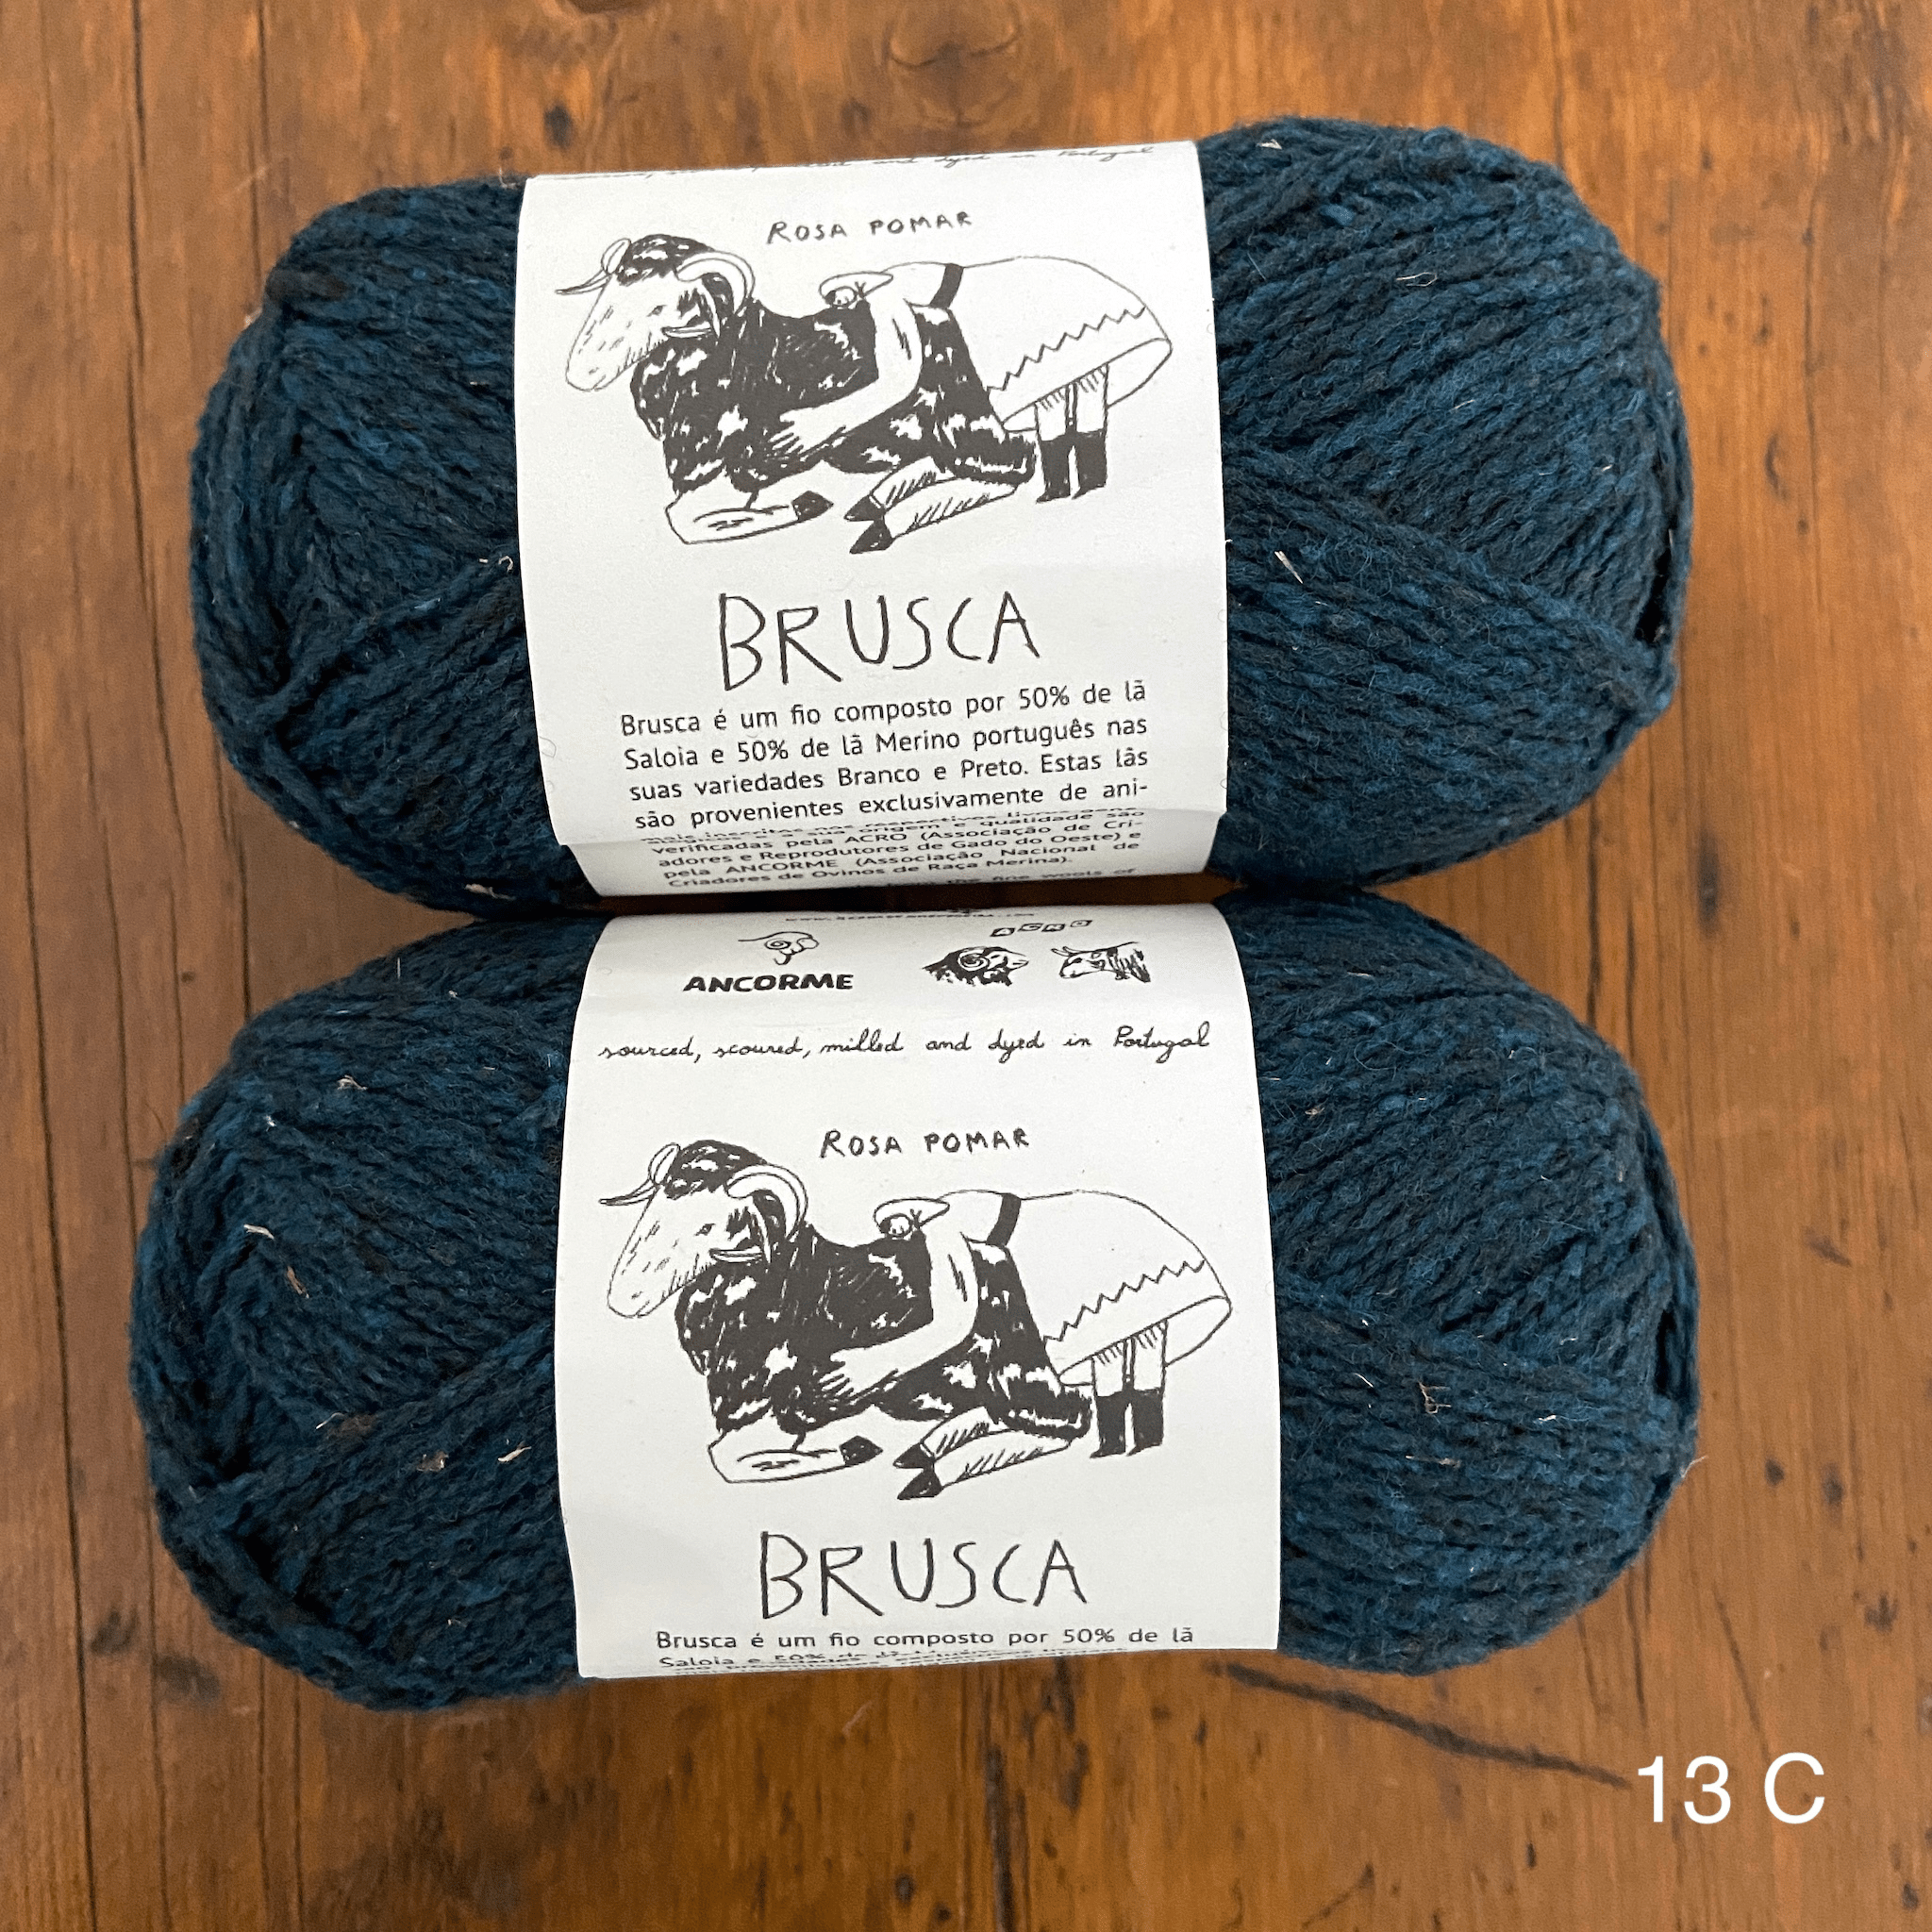 The Woolly Thistle Retrosaria Brusca DK Yarn in 13C (blue)